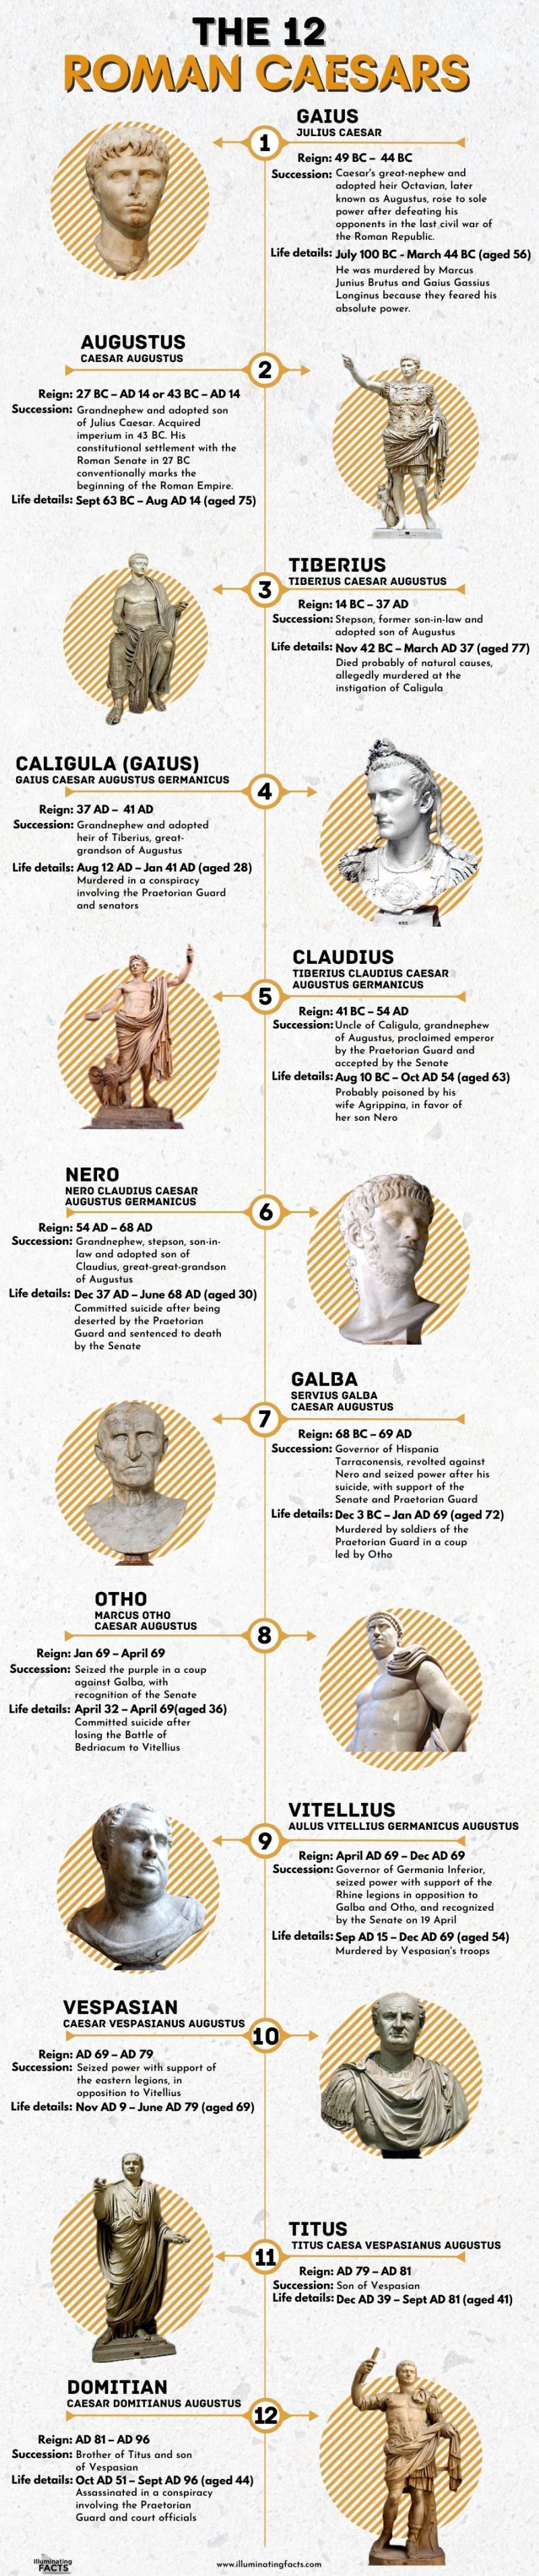 The 12 Roman Caesars